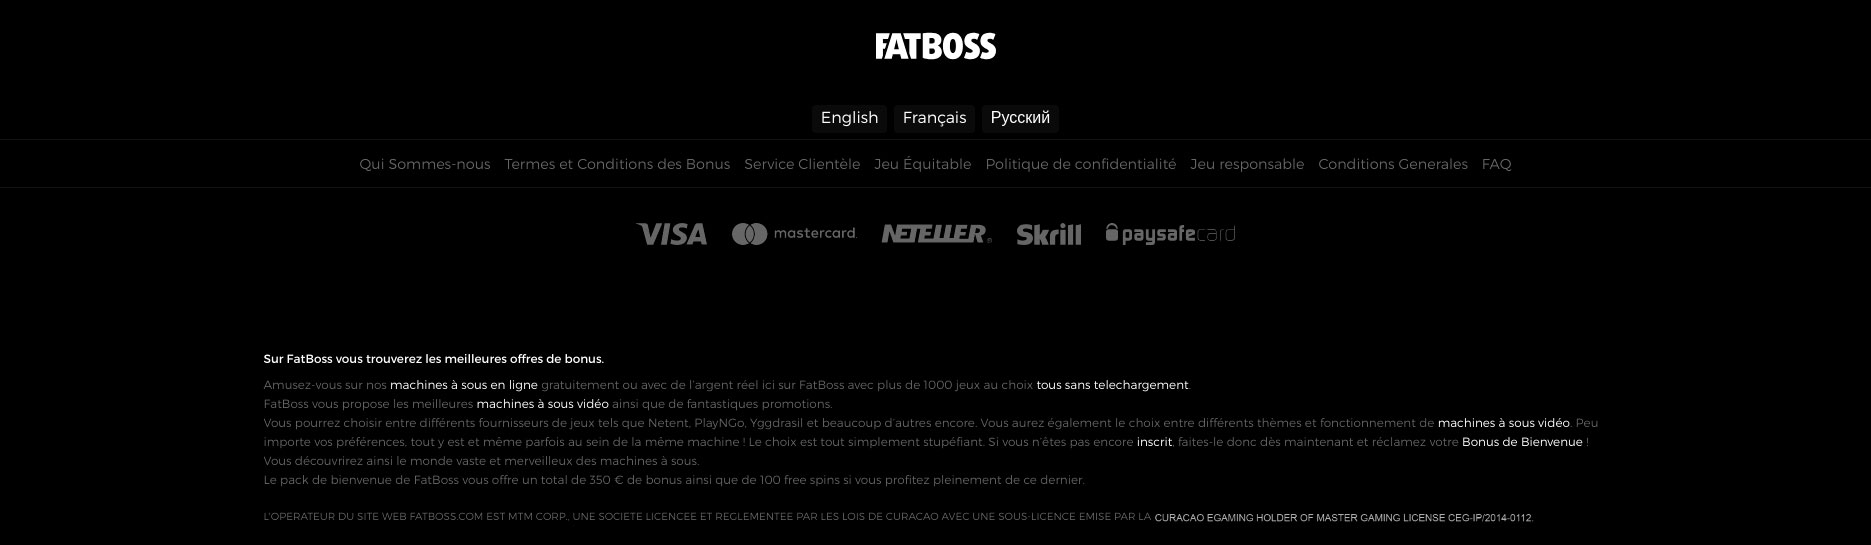 Fatboss bonus